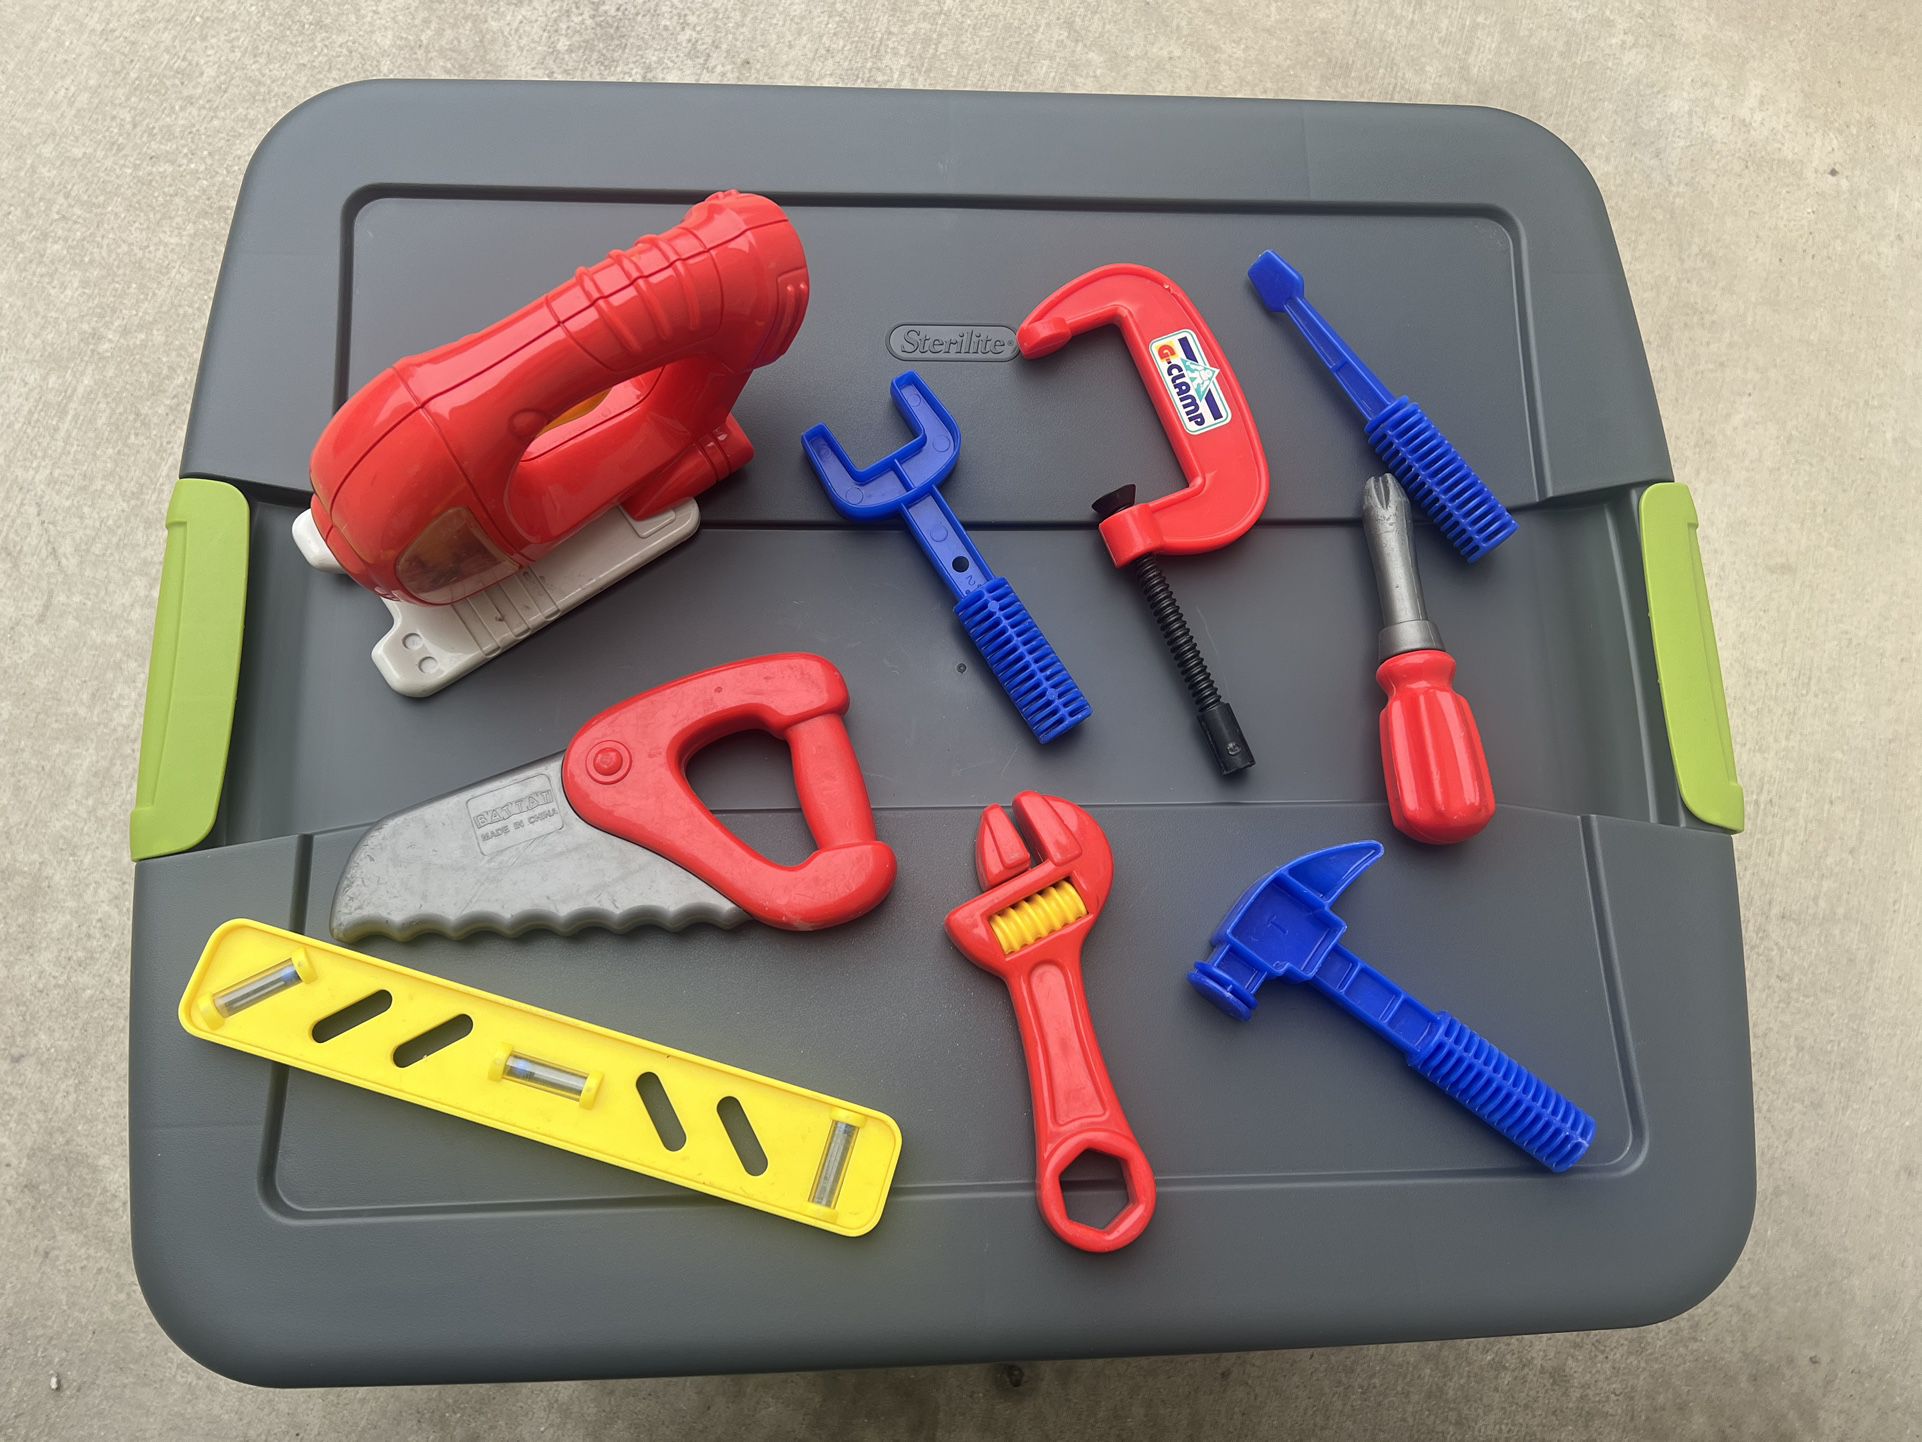 Baby Tool Set. Plastic Toys For Children. 